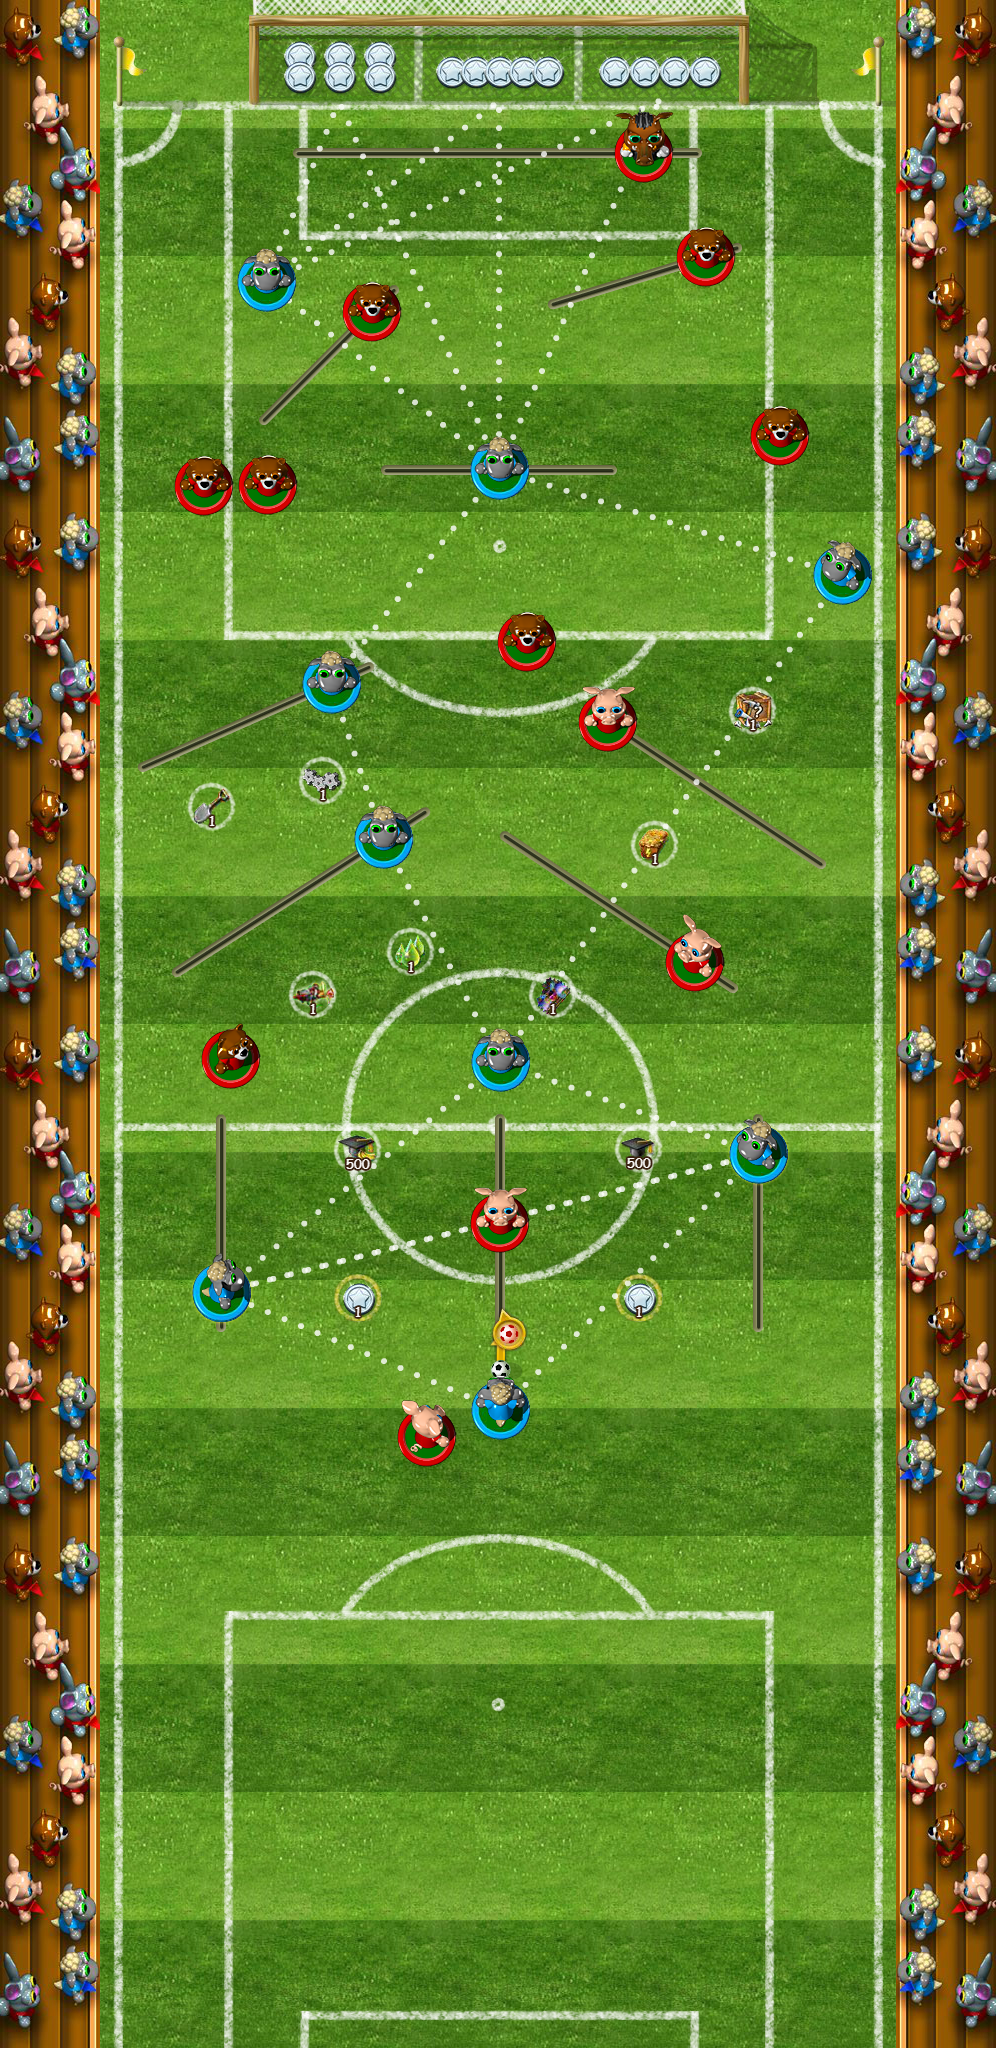 soccerjul2019_layout6.png